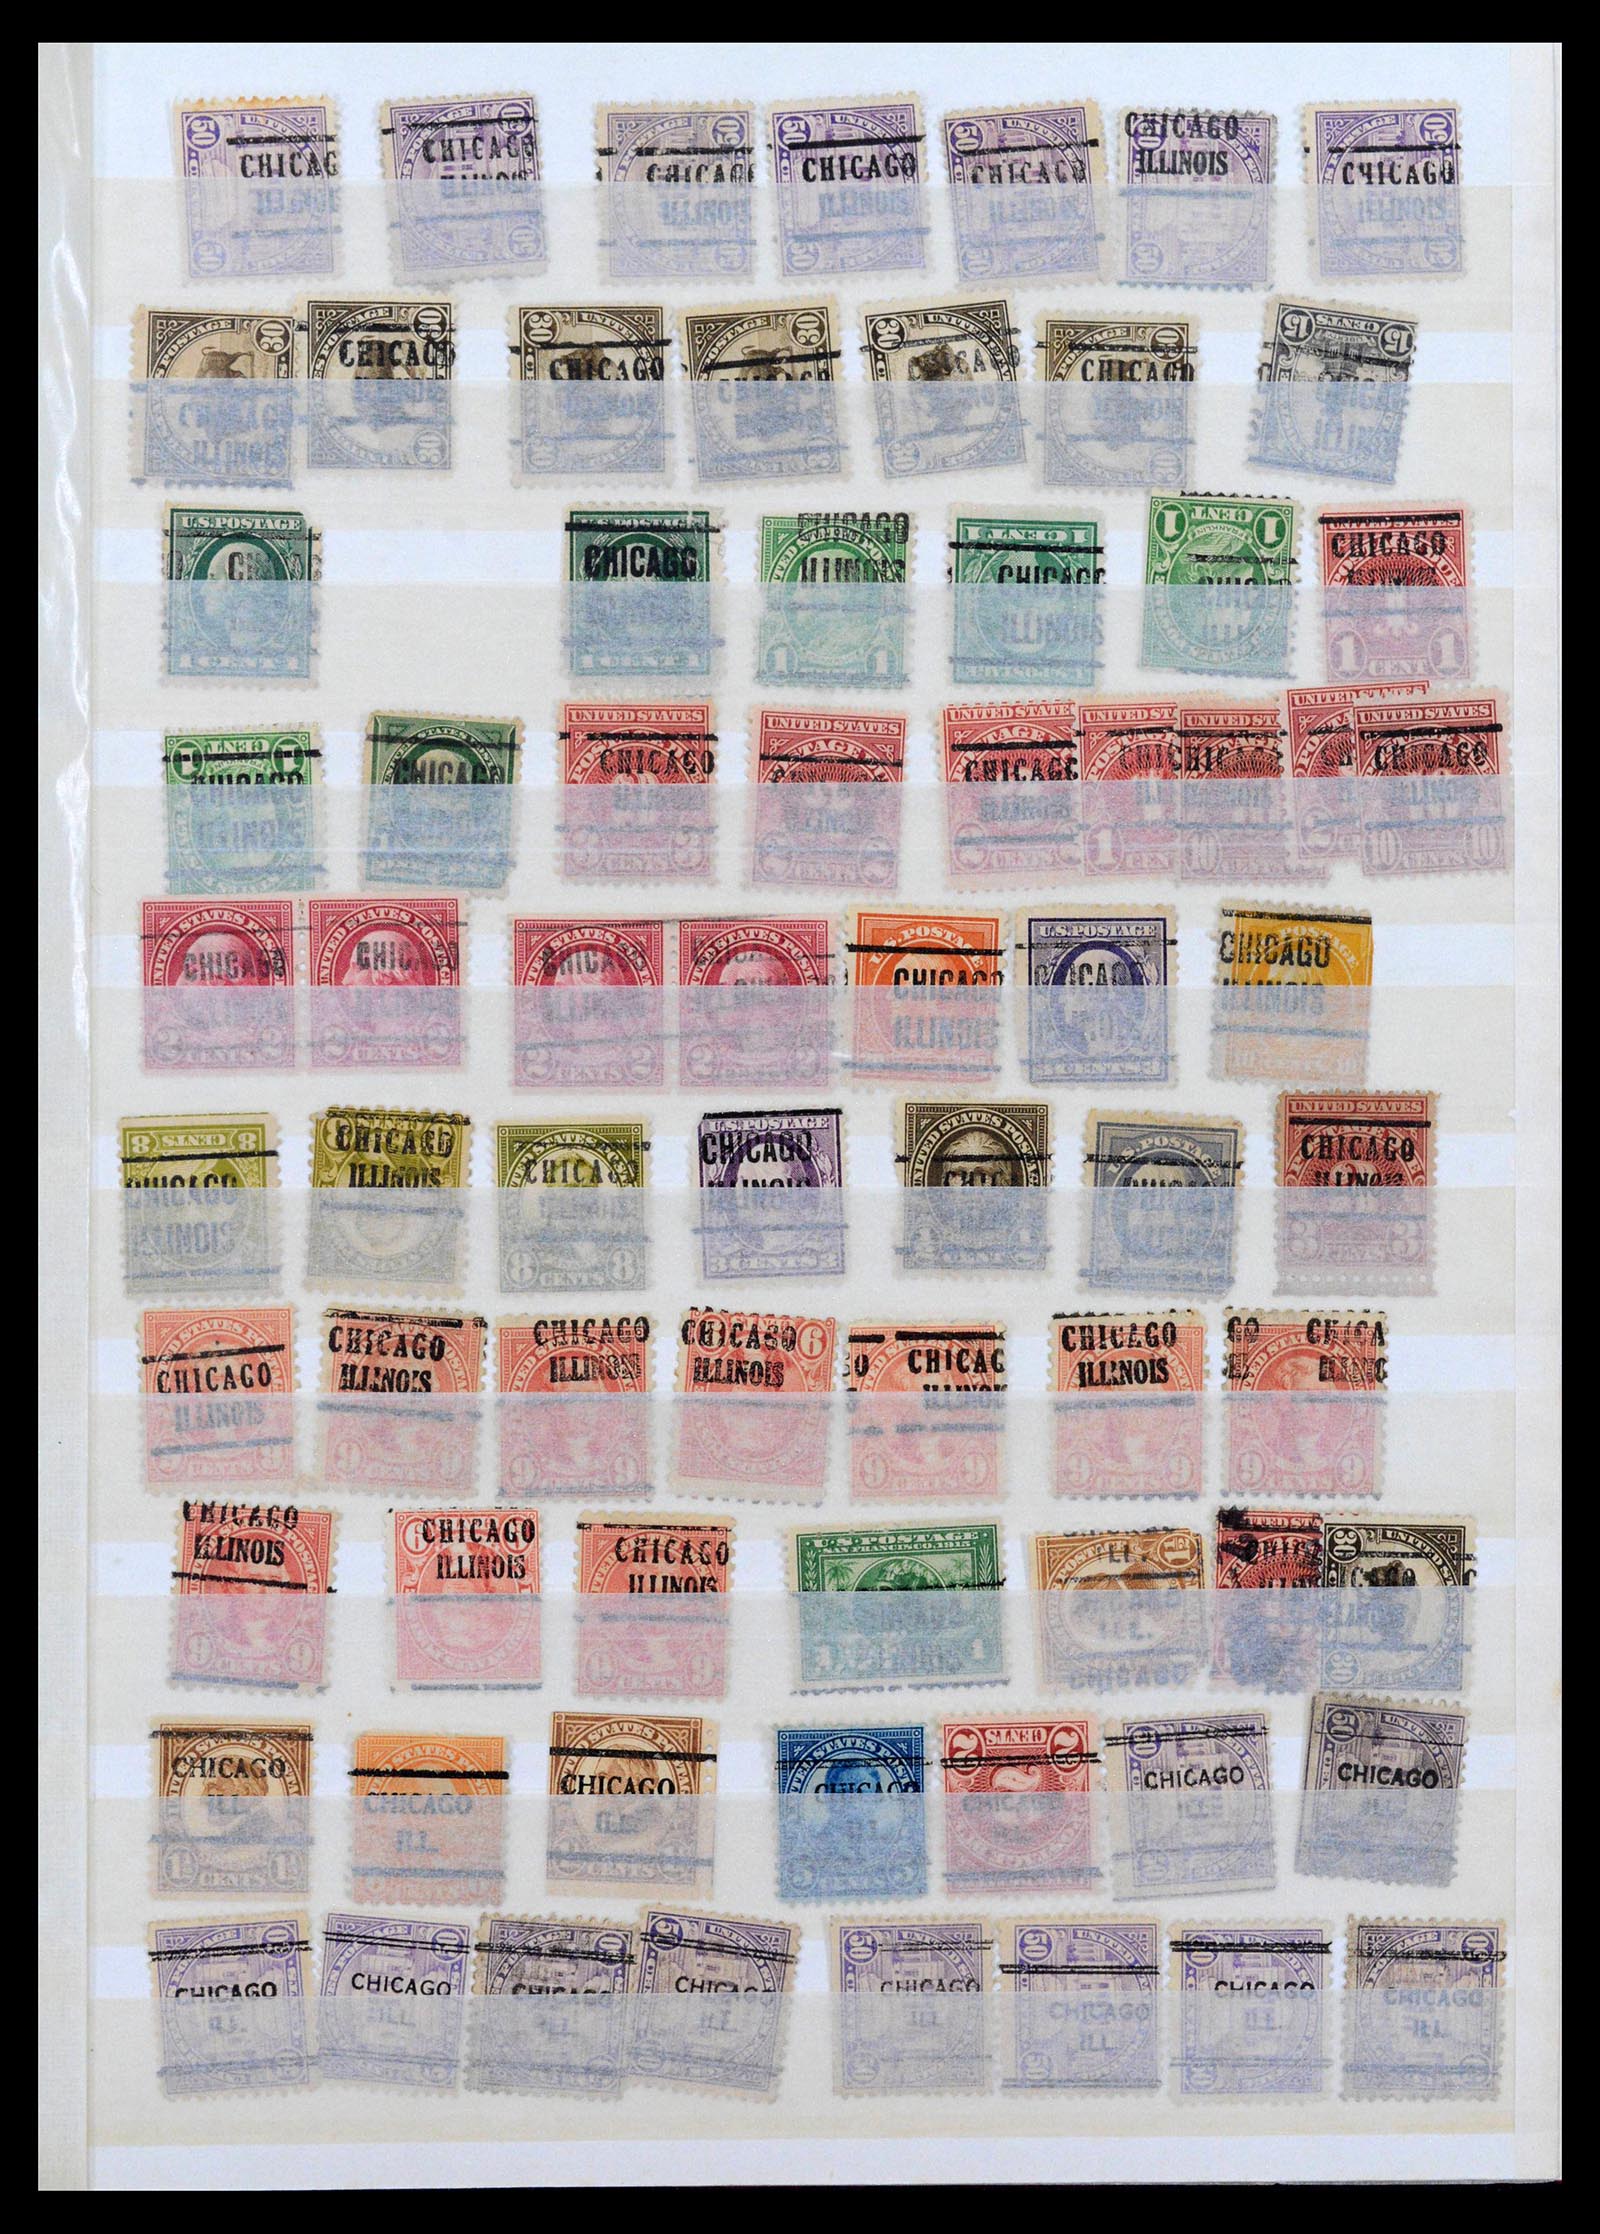 39366 0003 - Stamp collection 39366 USA precancels 1892-1940.